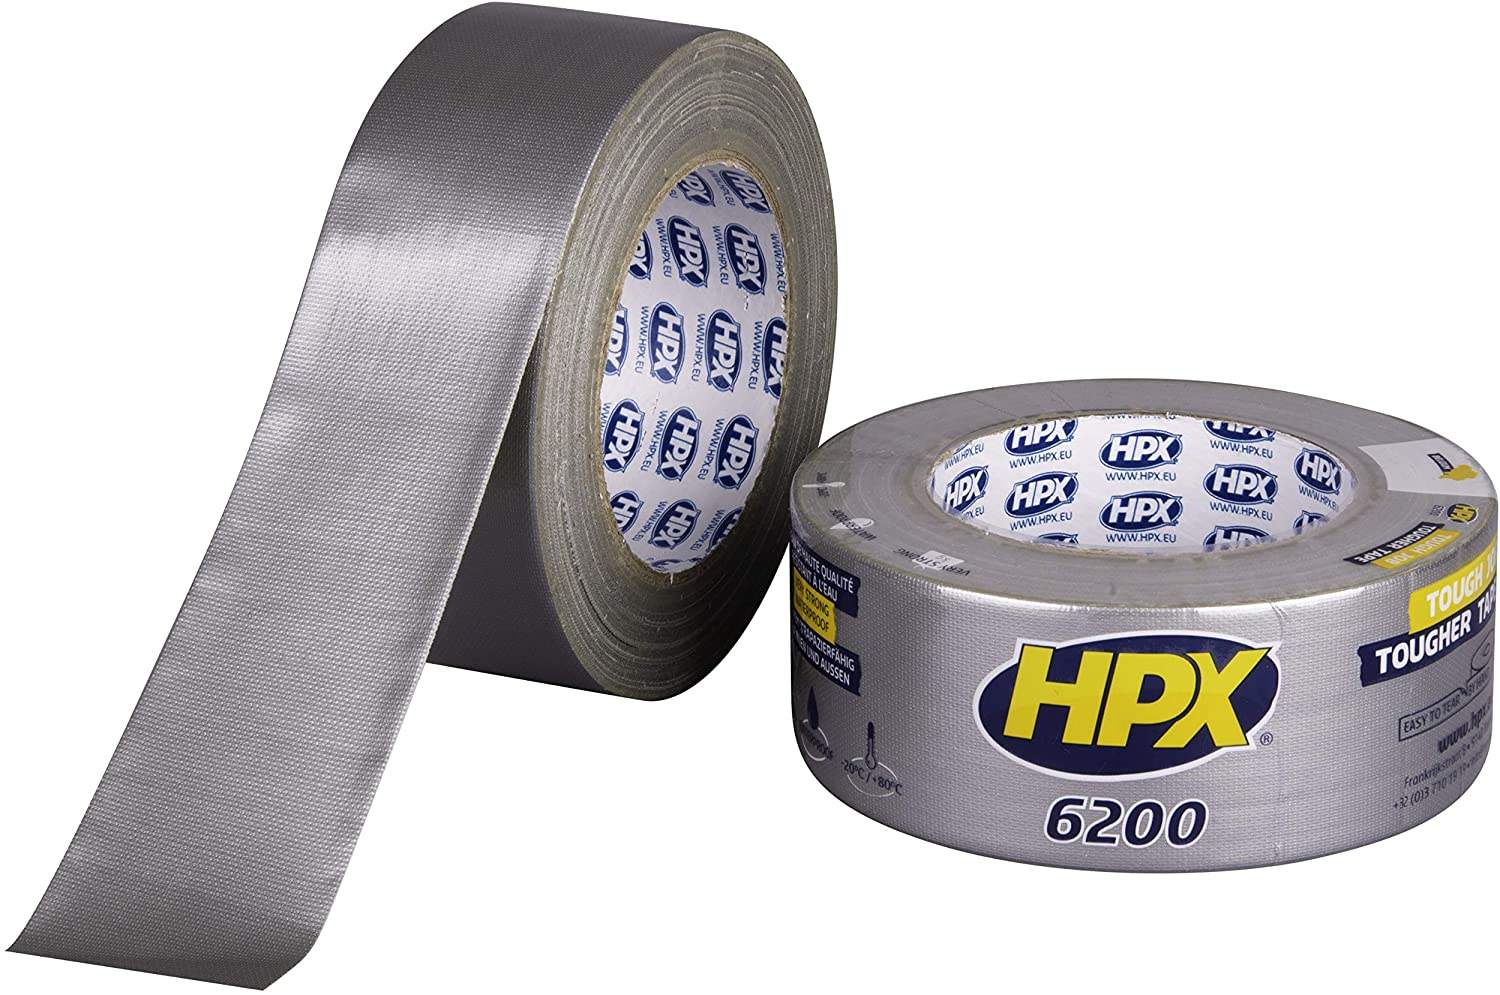 48mm x 25m silver adhesive cloth tape, HPX 6200 REPAIR TAPE